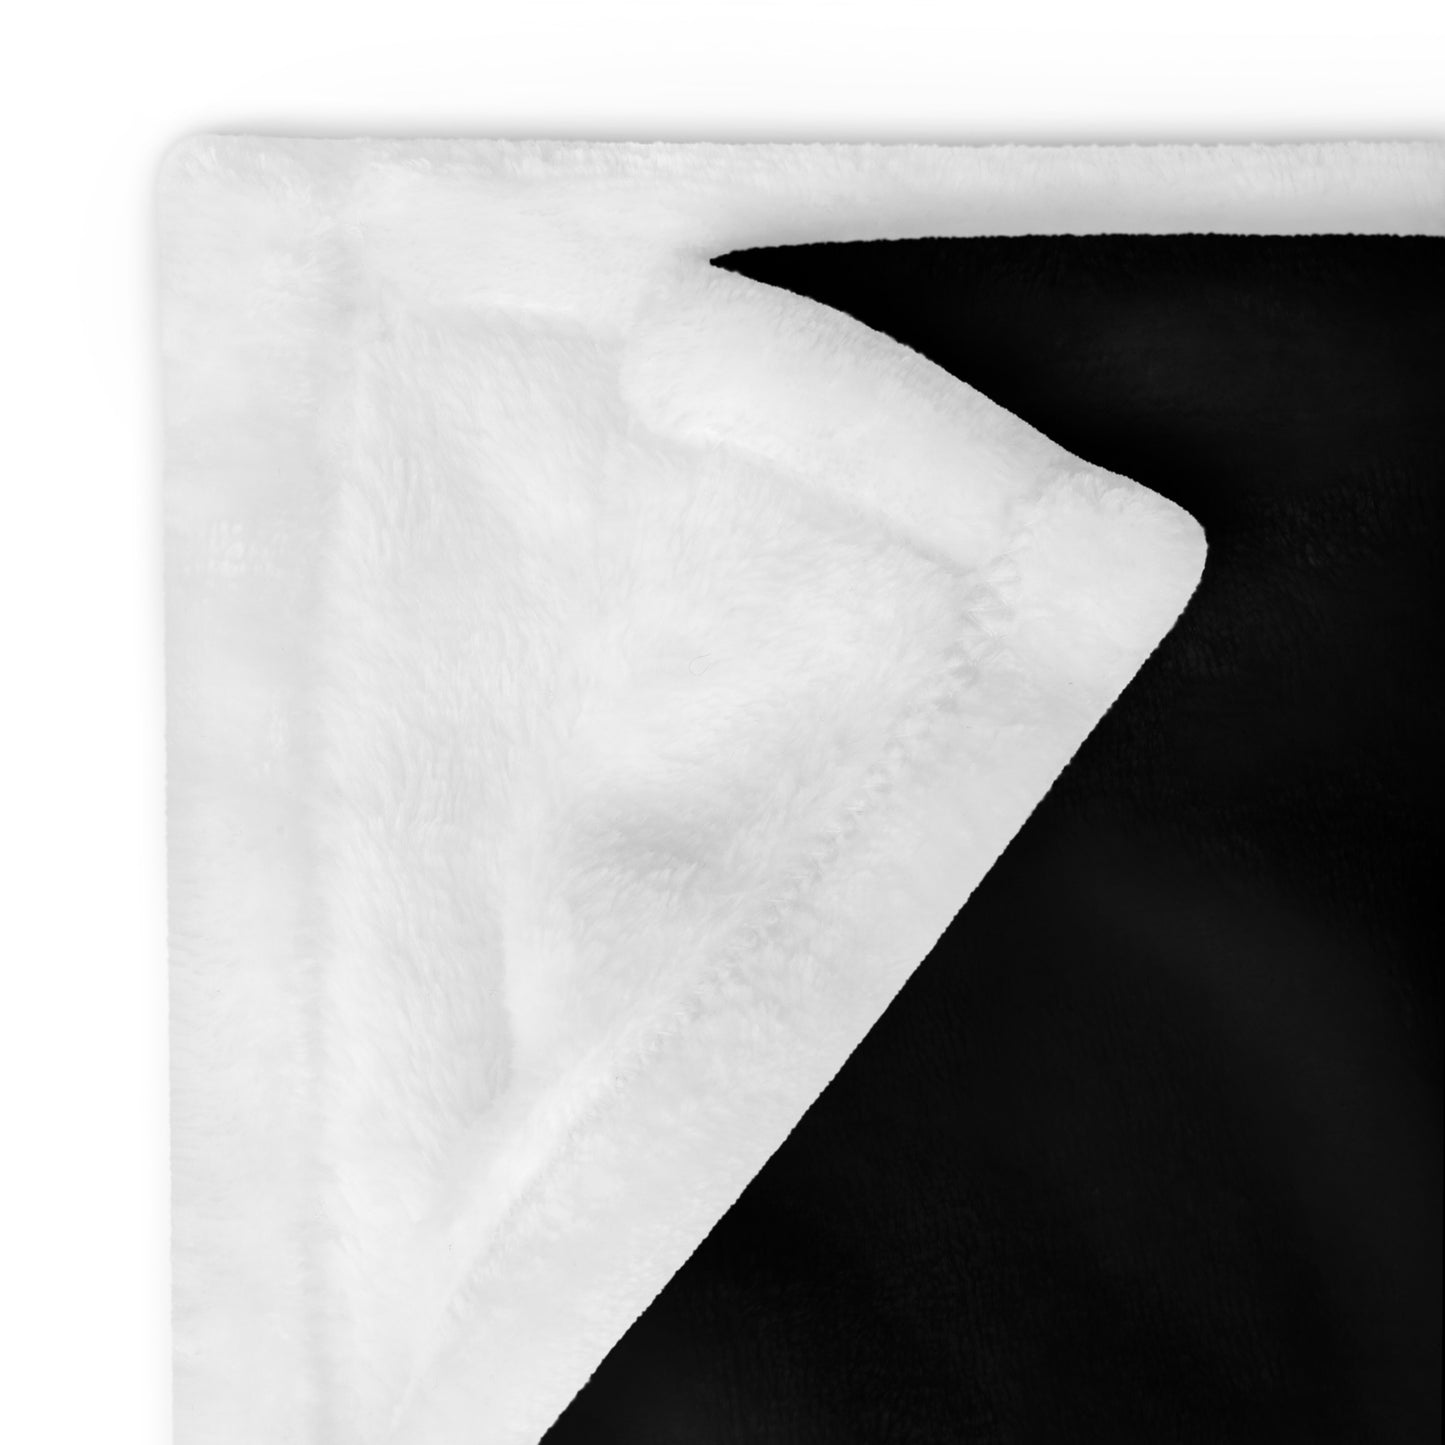 Silver Winter Wolf Throw Blanket Black by Stormseye Design